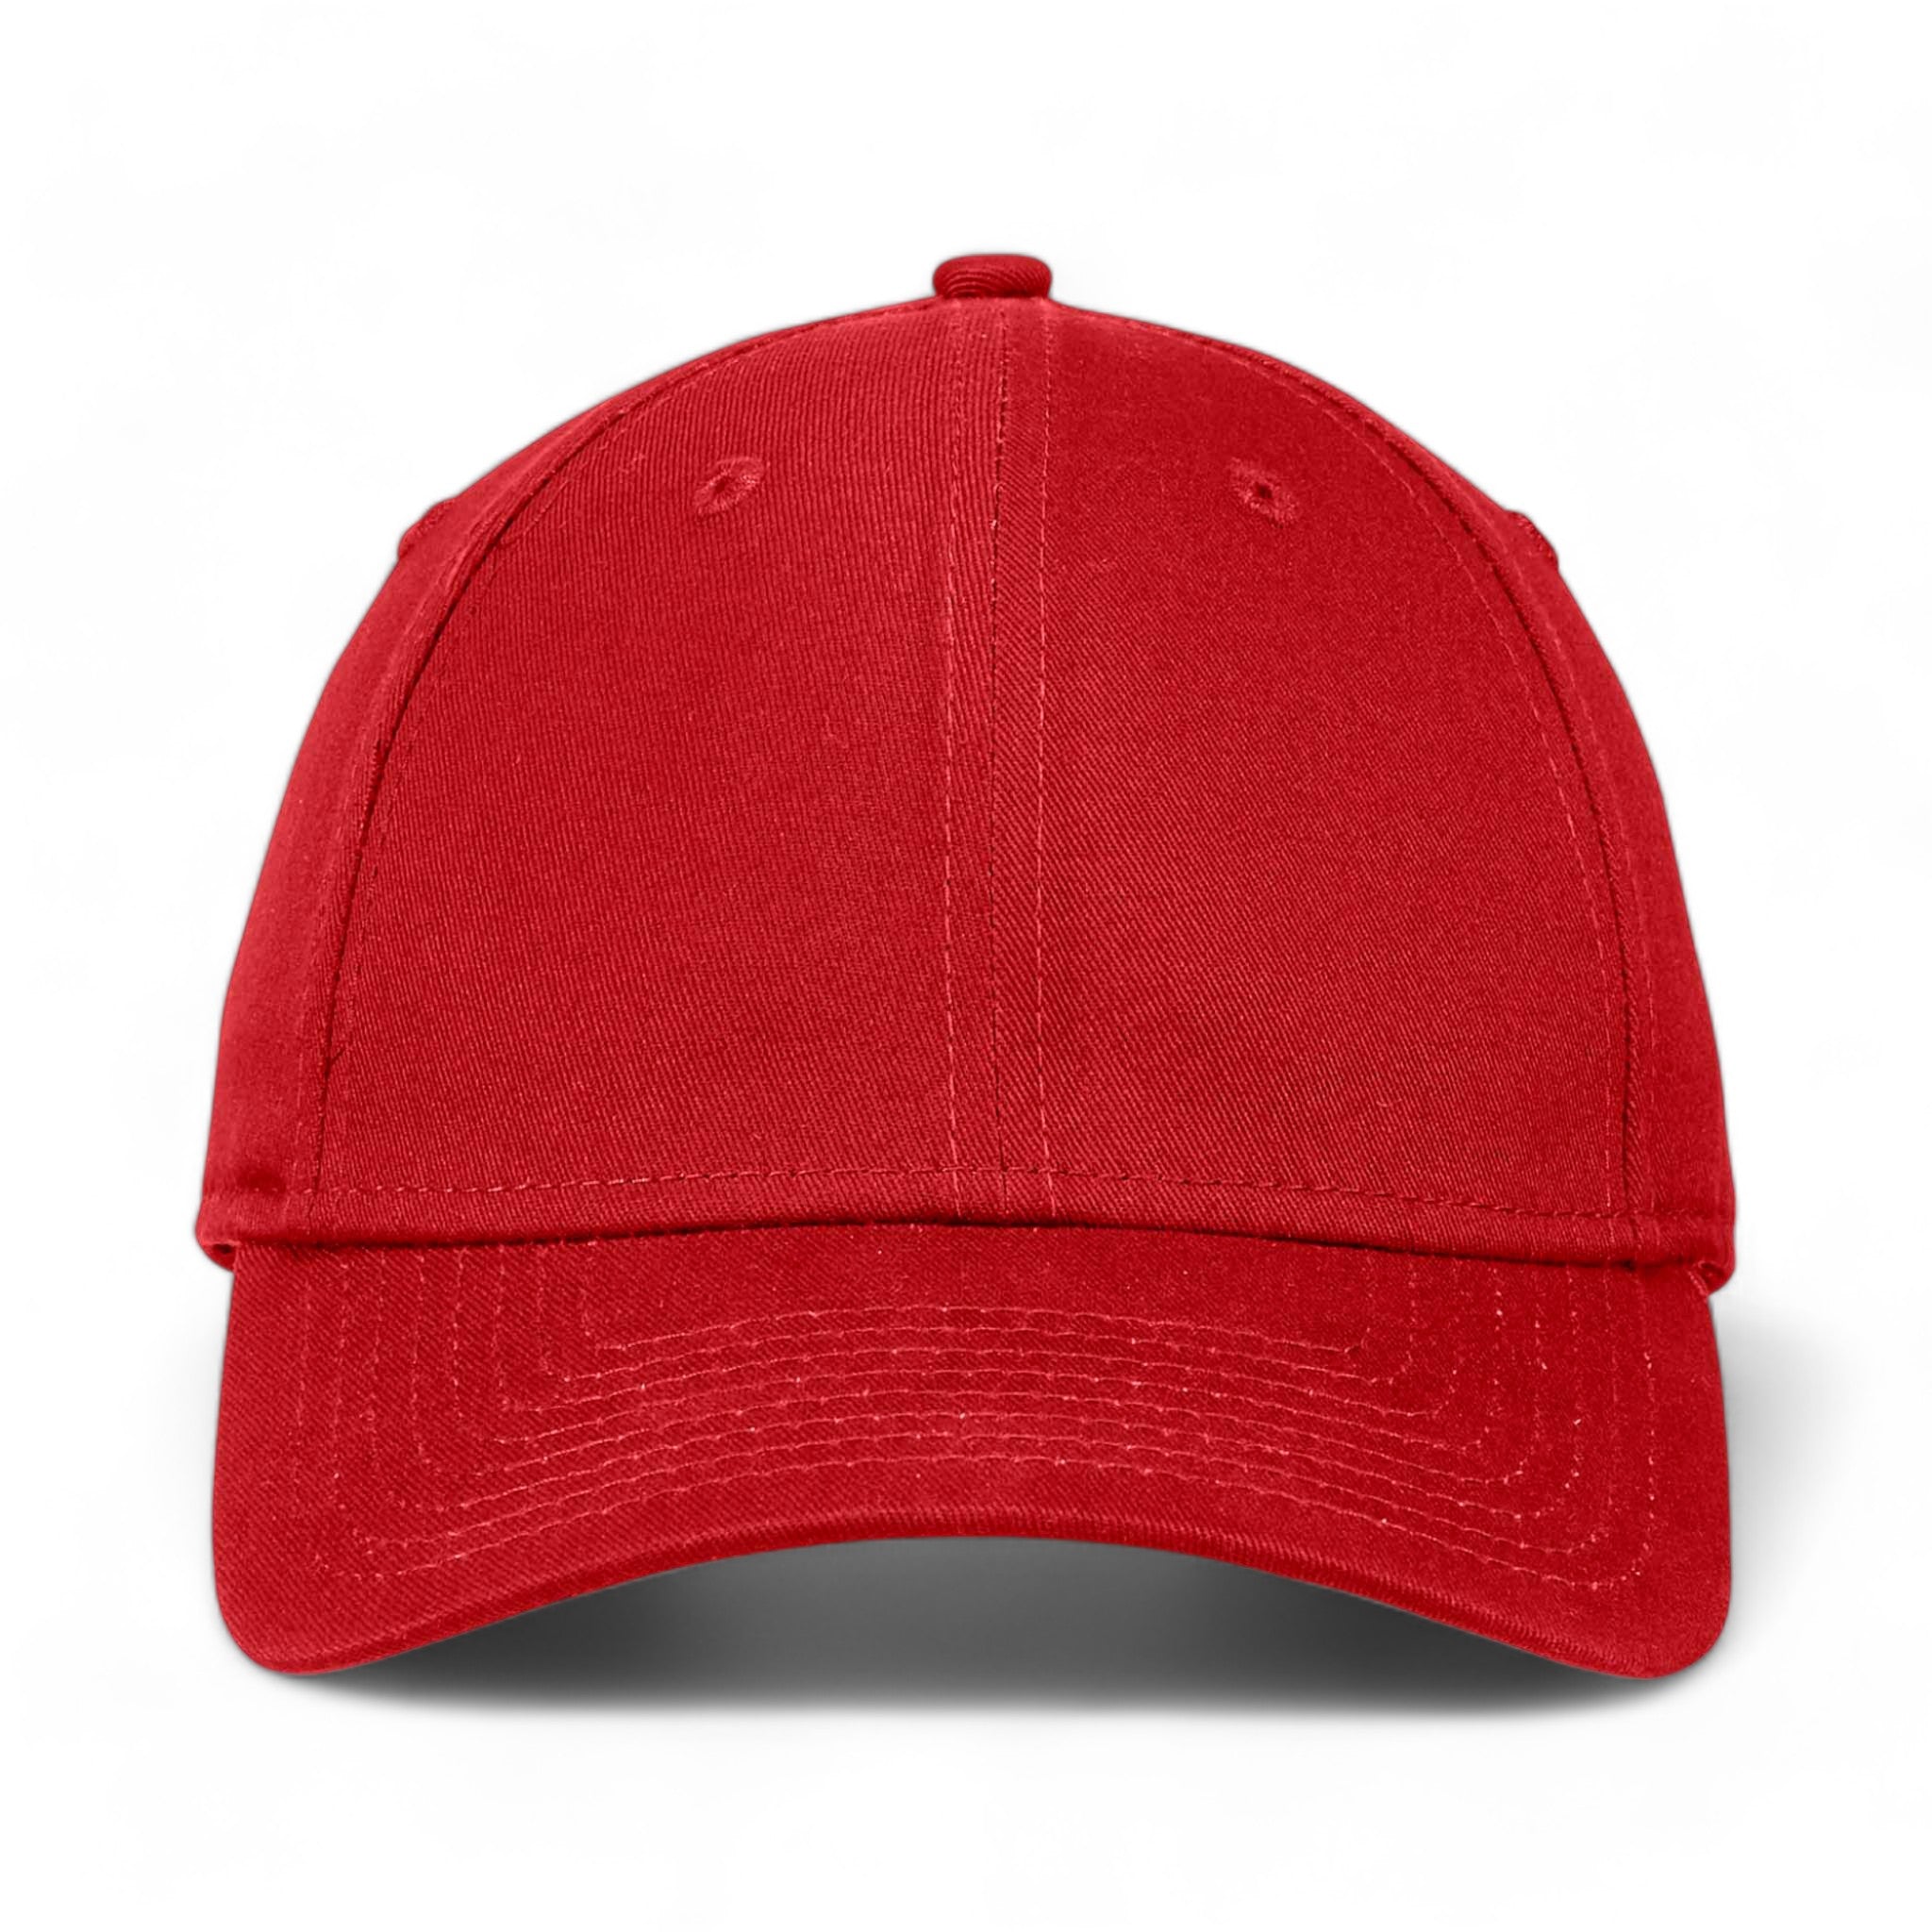 Front view of New Era NE200 custom hat in scarlet red